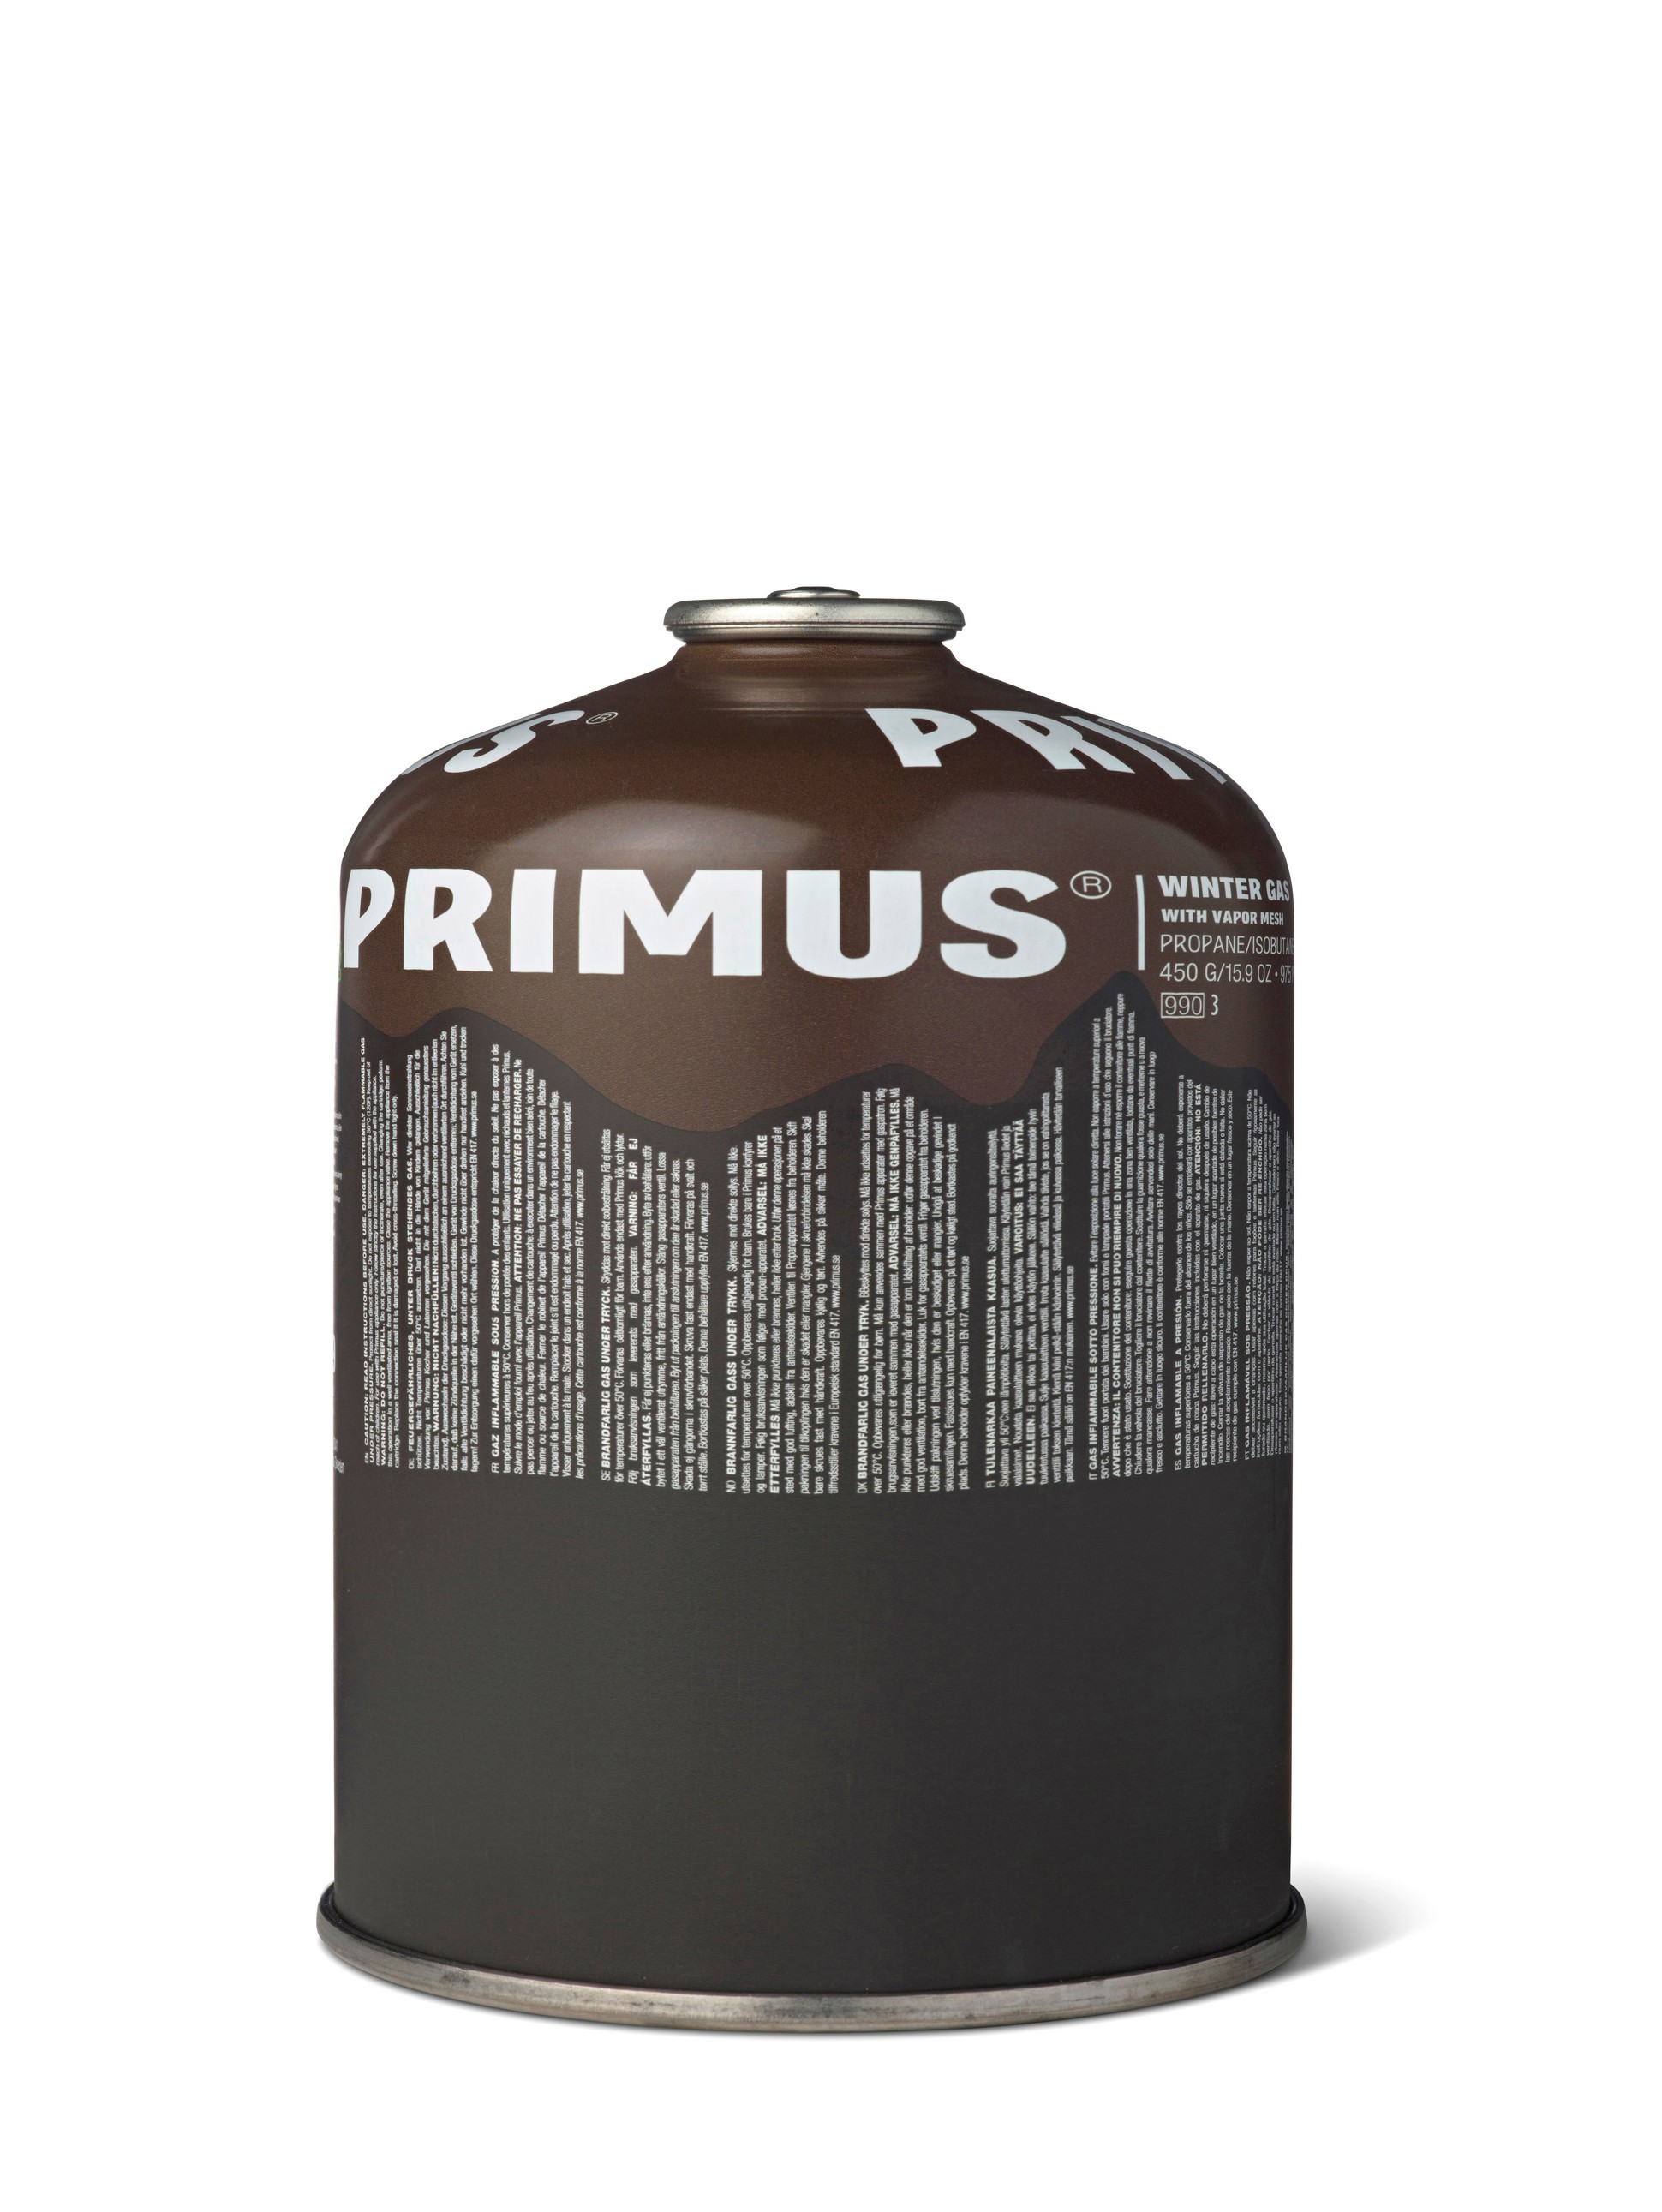 Primus "Winter Gas" - 450g